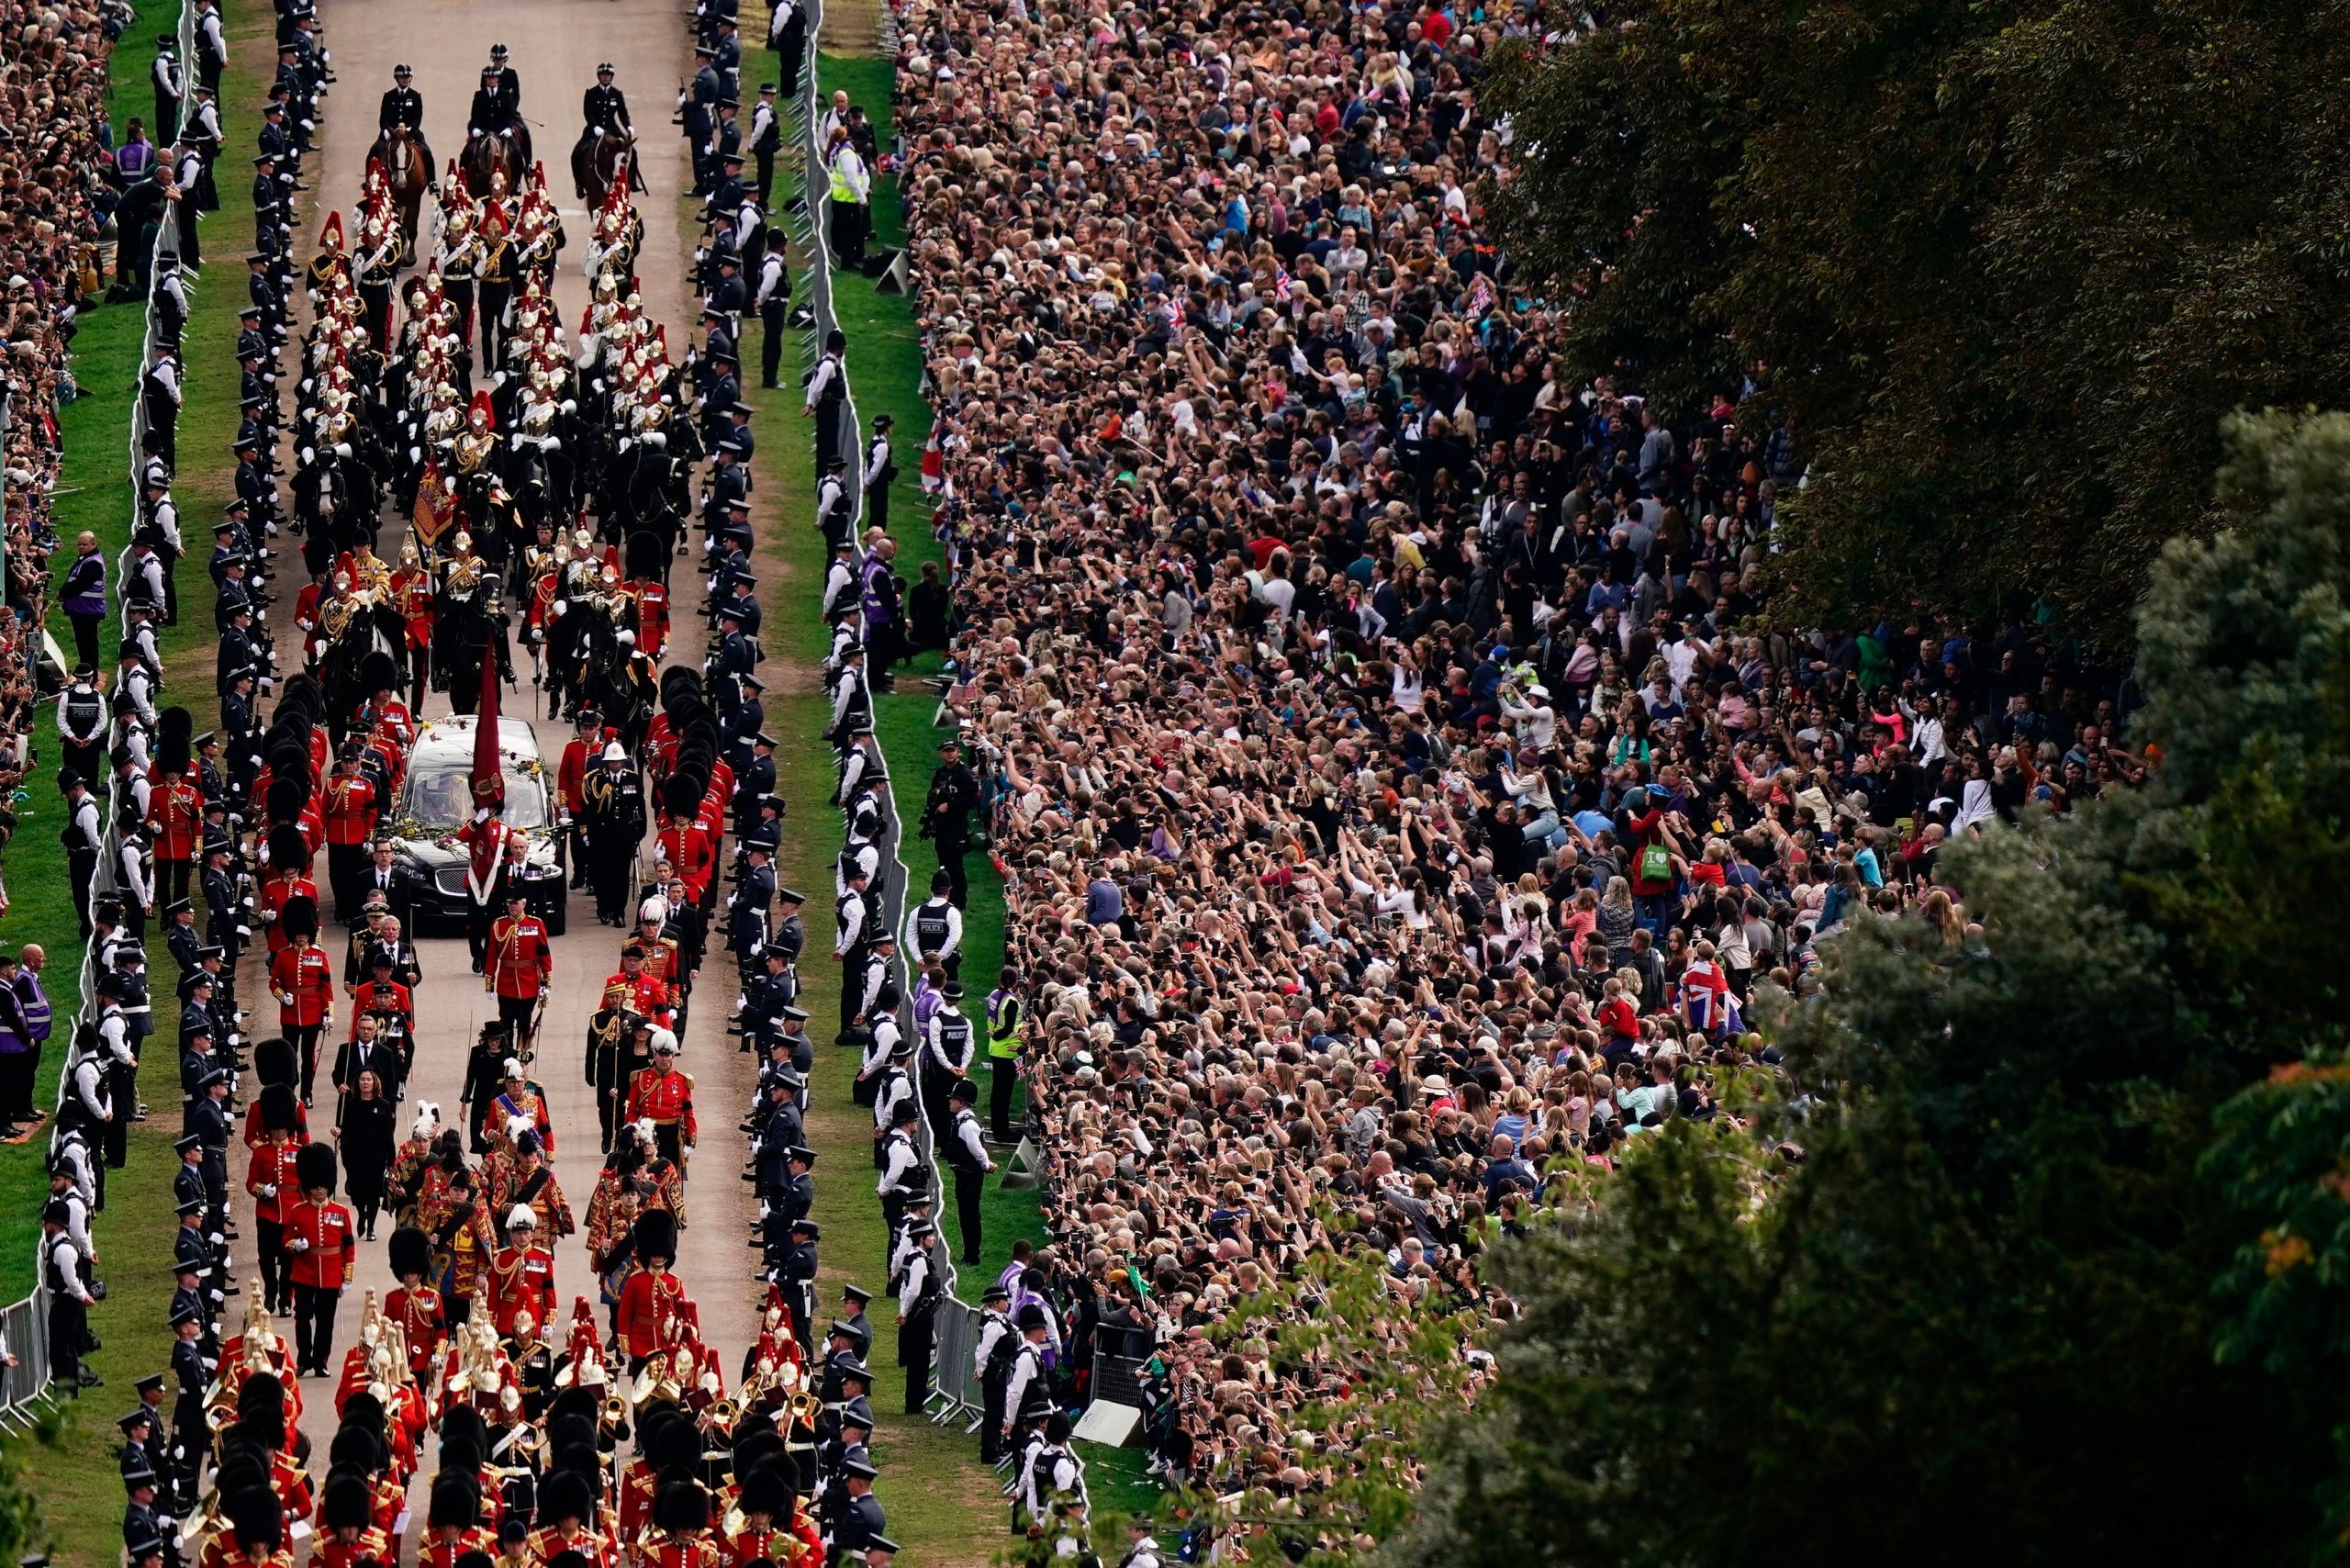 Queen Elizabeth II’s funeral: 3 things you may have missed